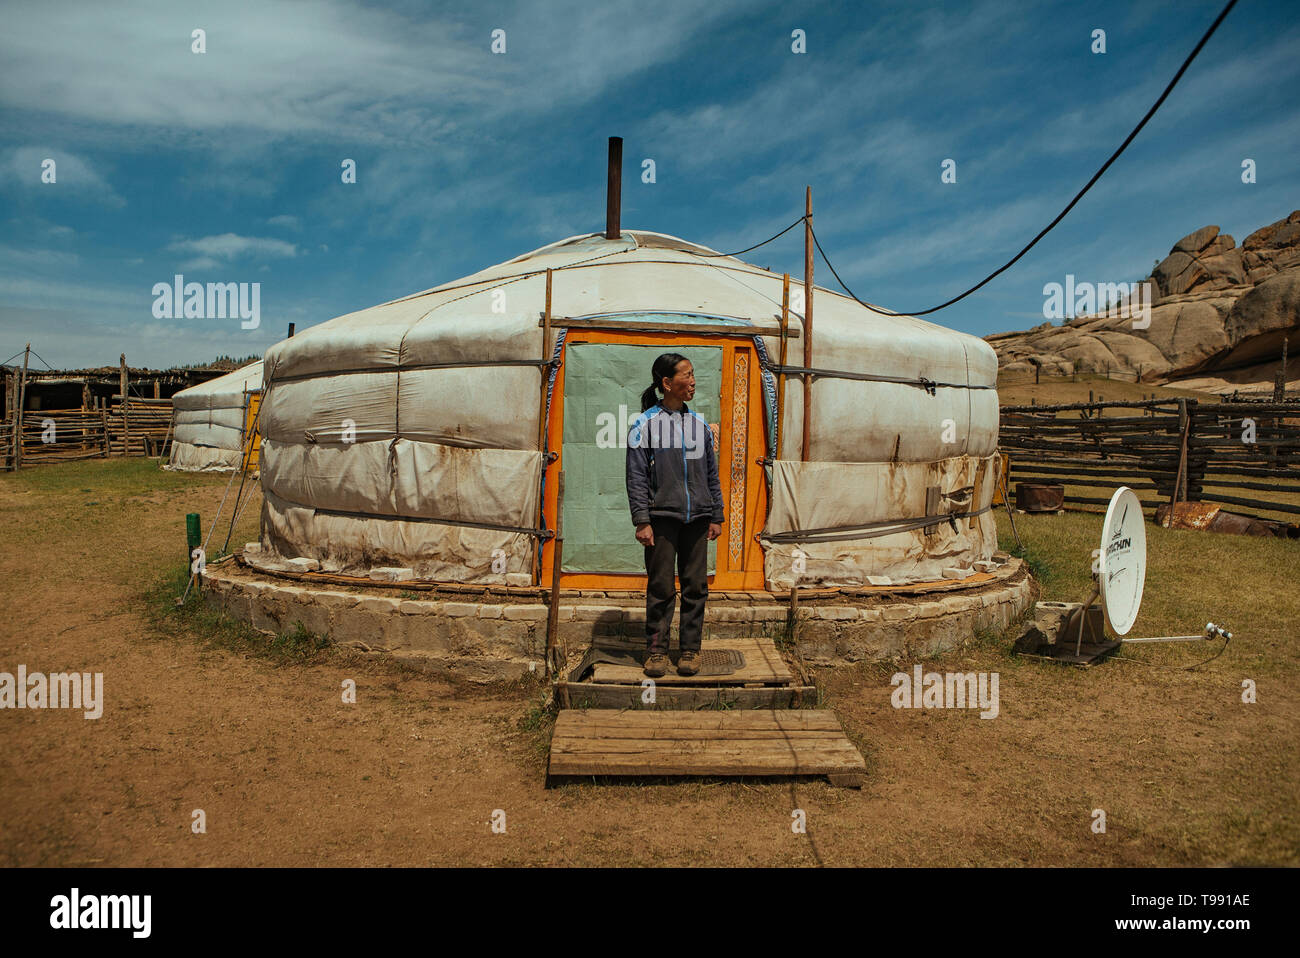 Nomad woman stands in front of yurt, Mongolian Switzerland, Gobi Desert, Mongolia Stock Photo